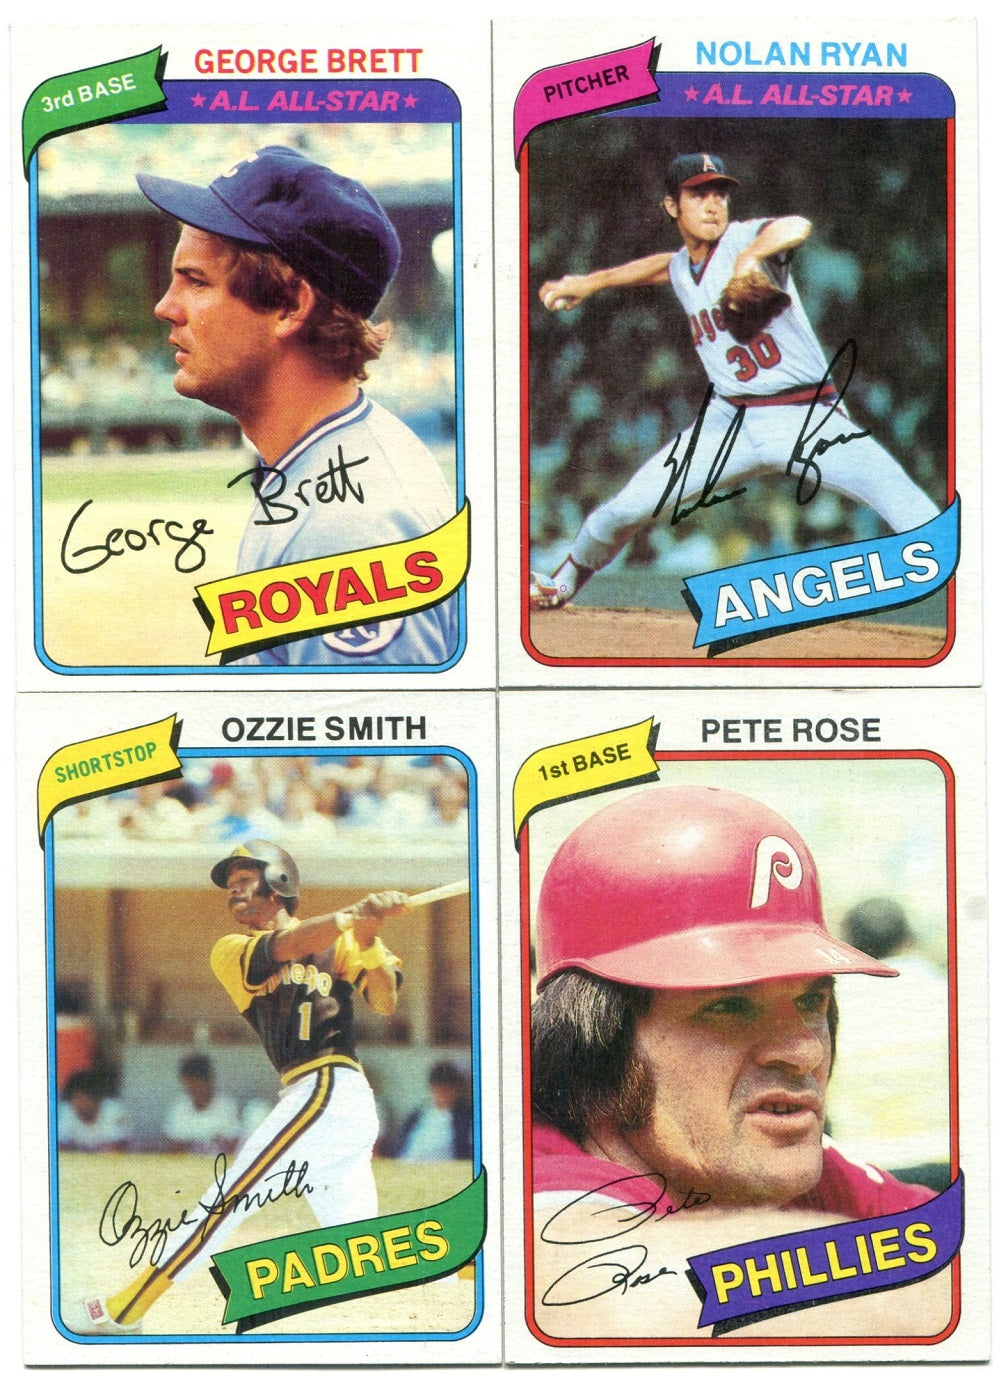 1980 Topps Baseball Complete Set NM NM/MT (726) (23-107)